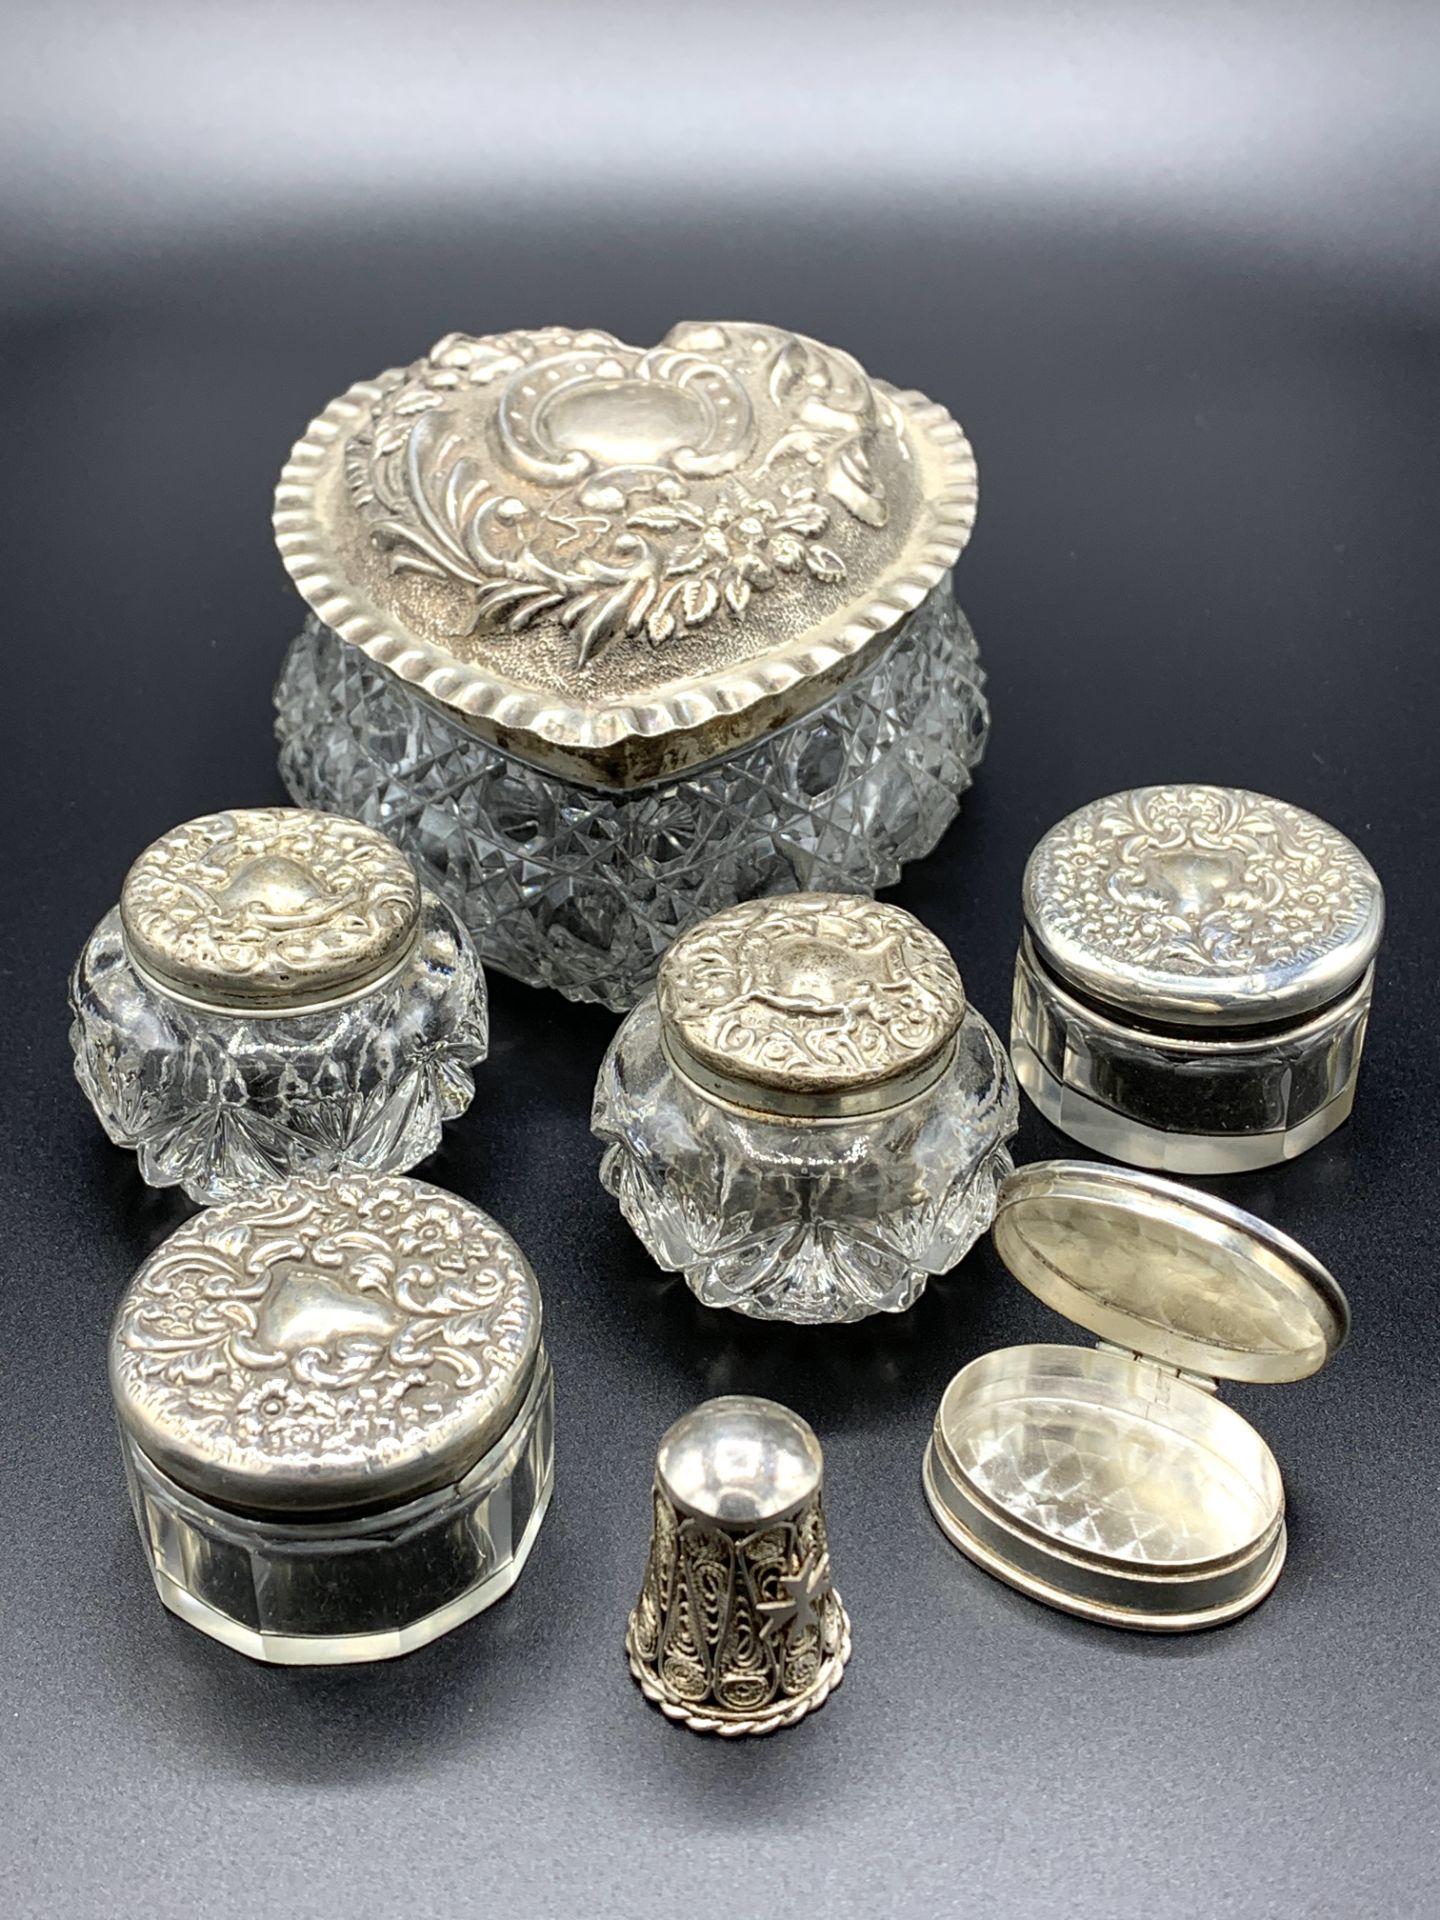 Six silver lidded glass pots - Image 2 of 4